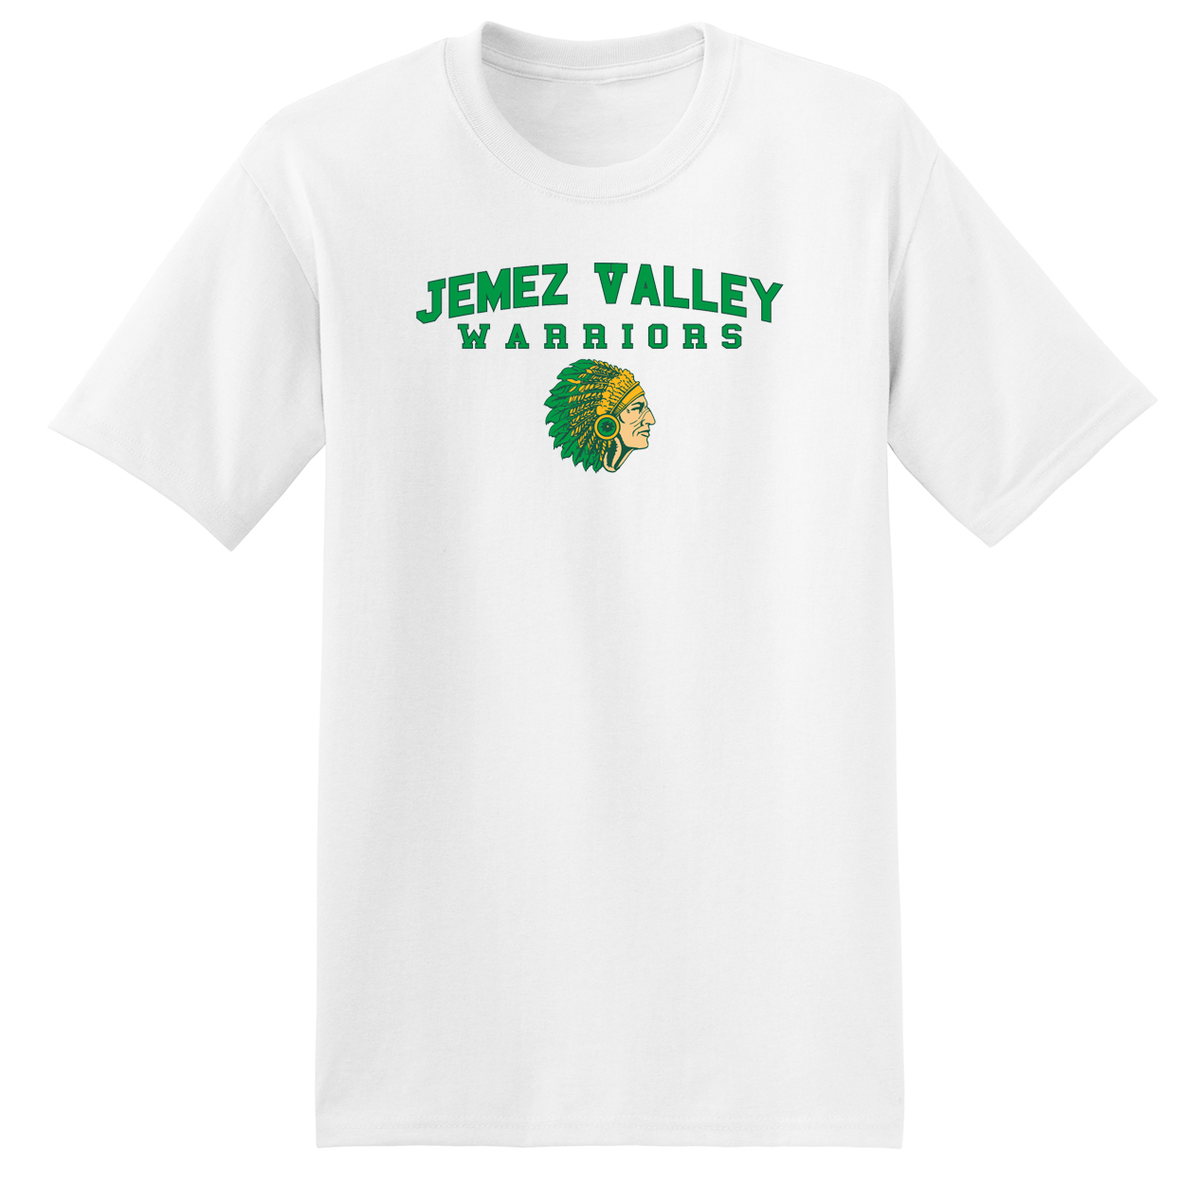 Jemez Valley Warriors T-Shirt